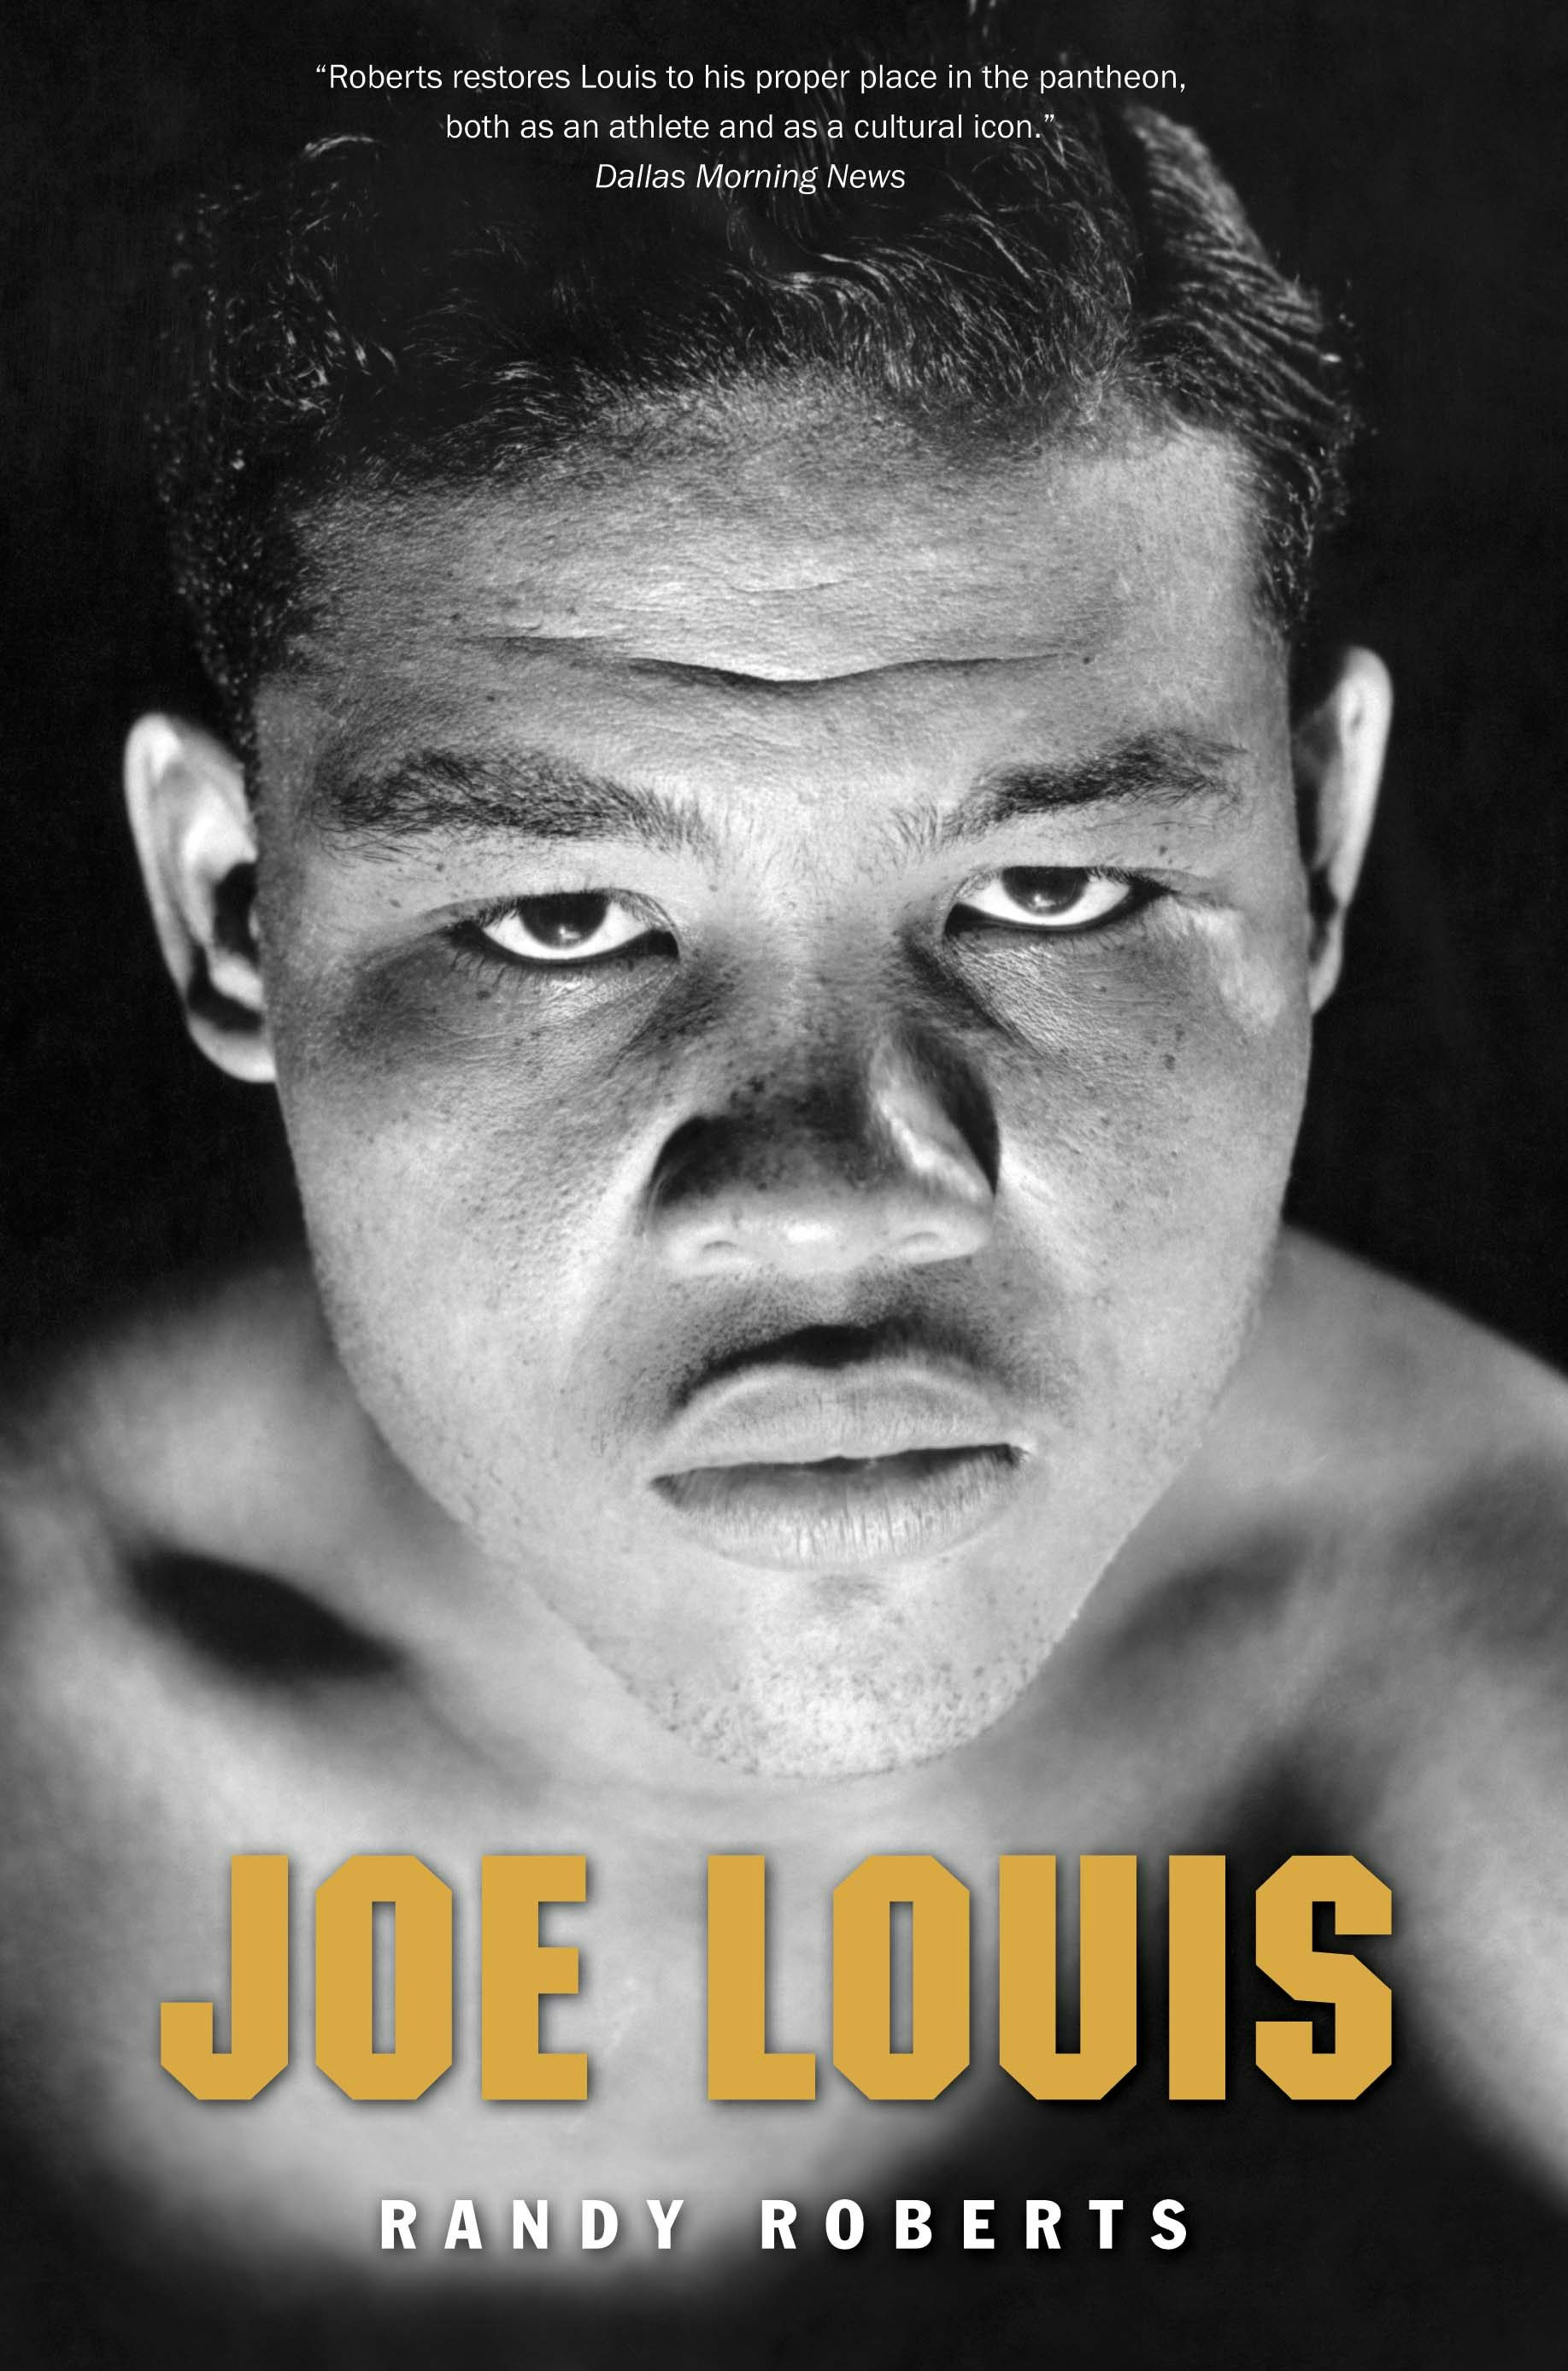 Joe Louis - Boxing, Record & Max Schmeling